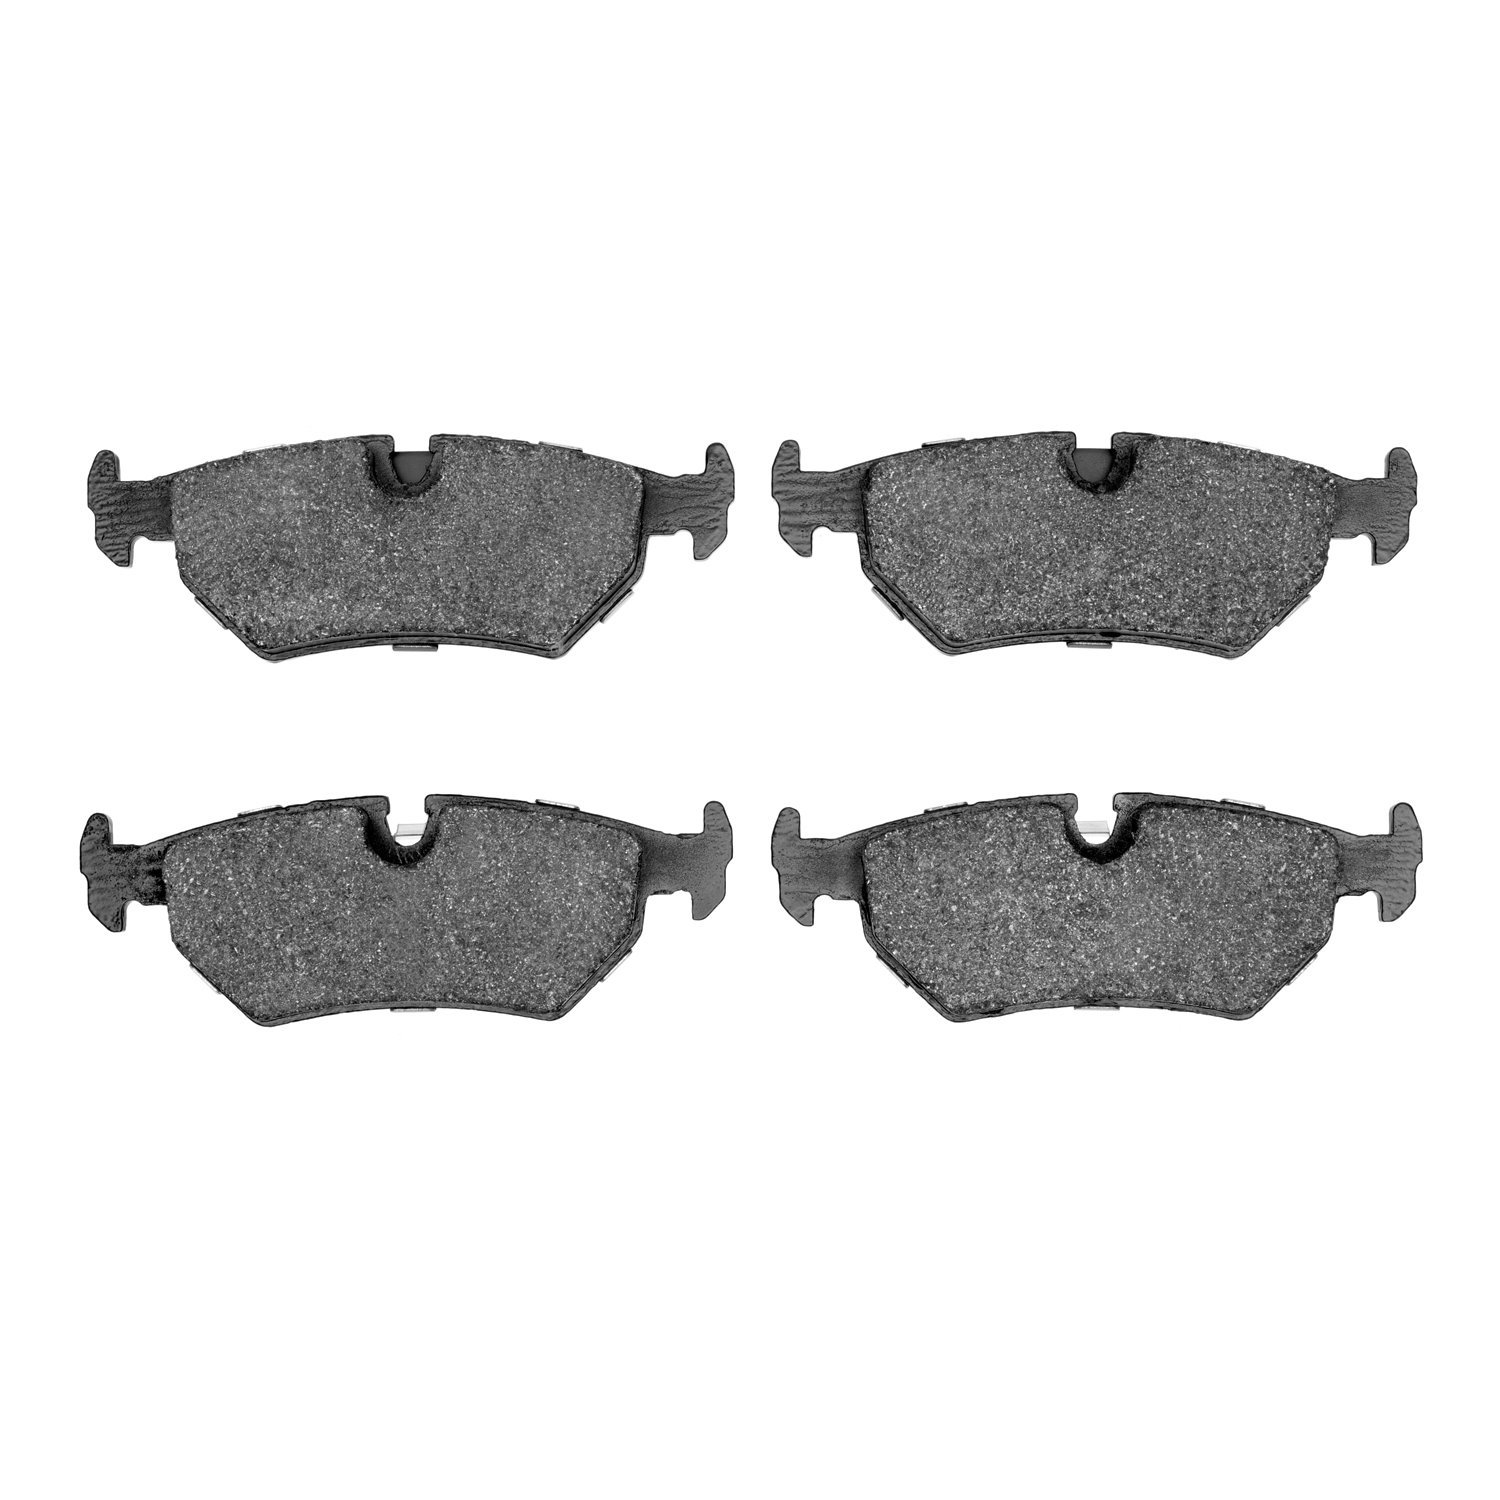 1551-0517-00 5000 Advanced Low-Metallic Brake Pads, 1990-2004 Multiple Makes/Models, Position: Rear